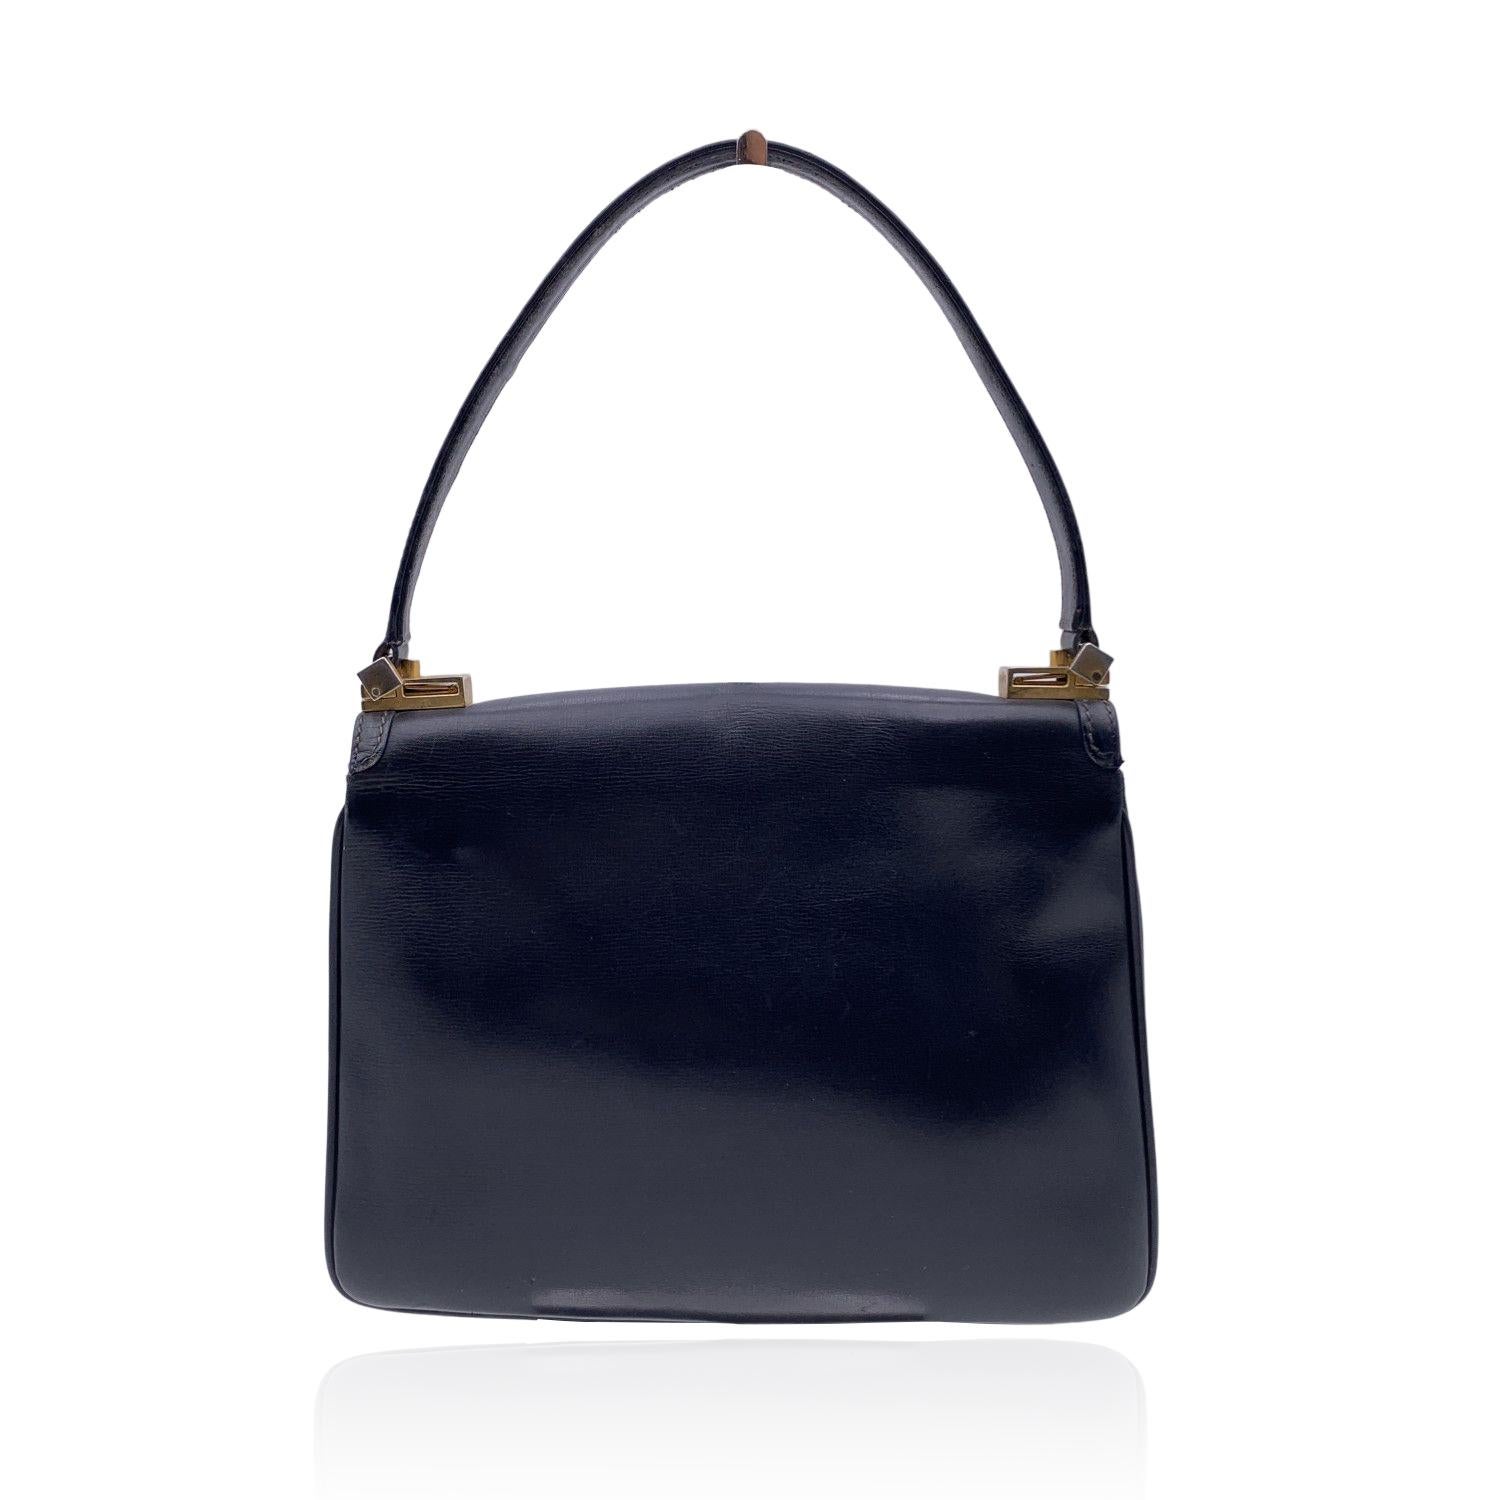 Gucci Vintage Navy Blue Leather Flap Handbag Top Handle Bag 1